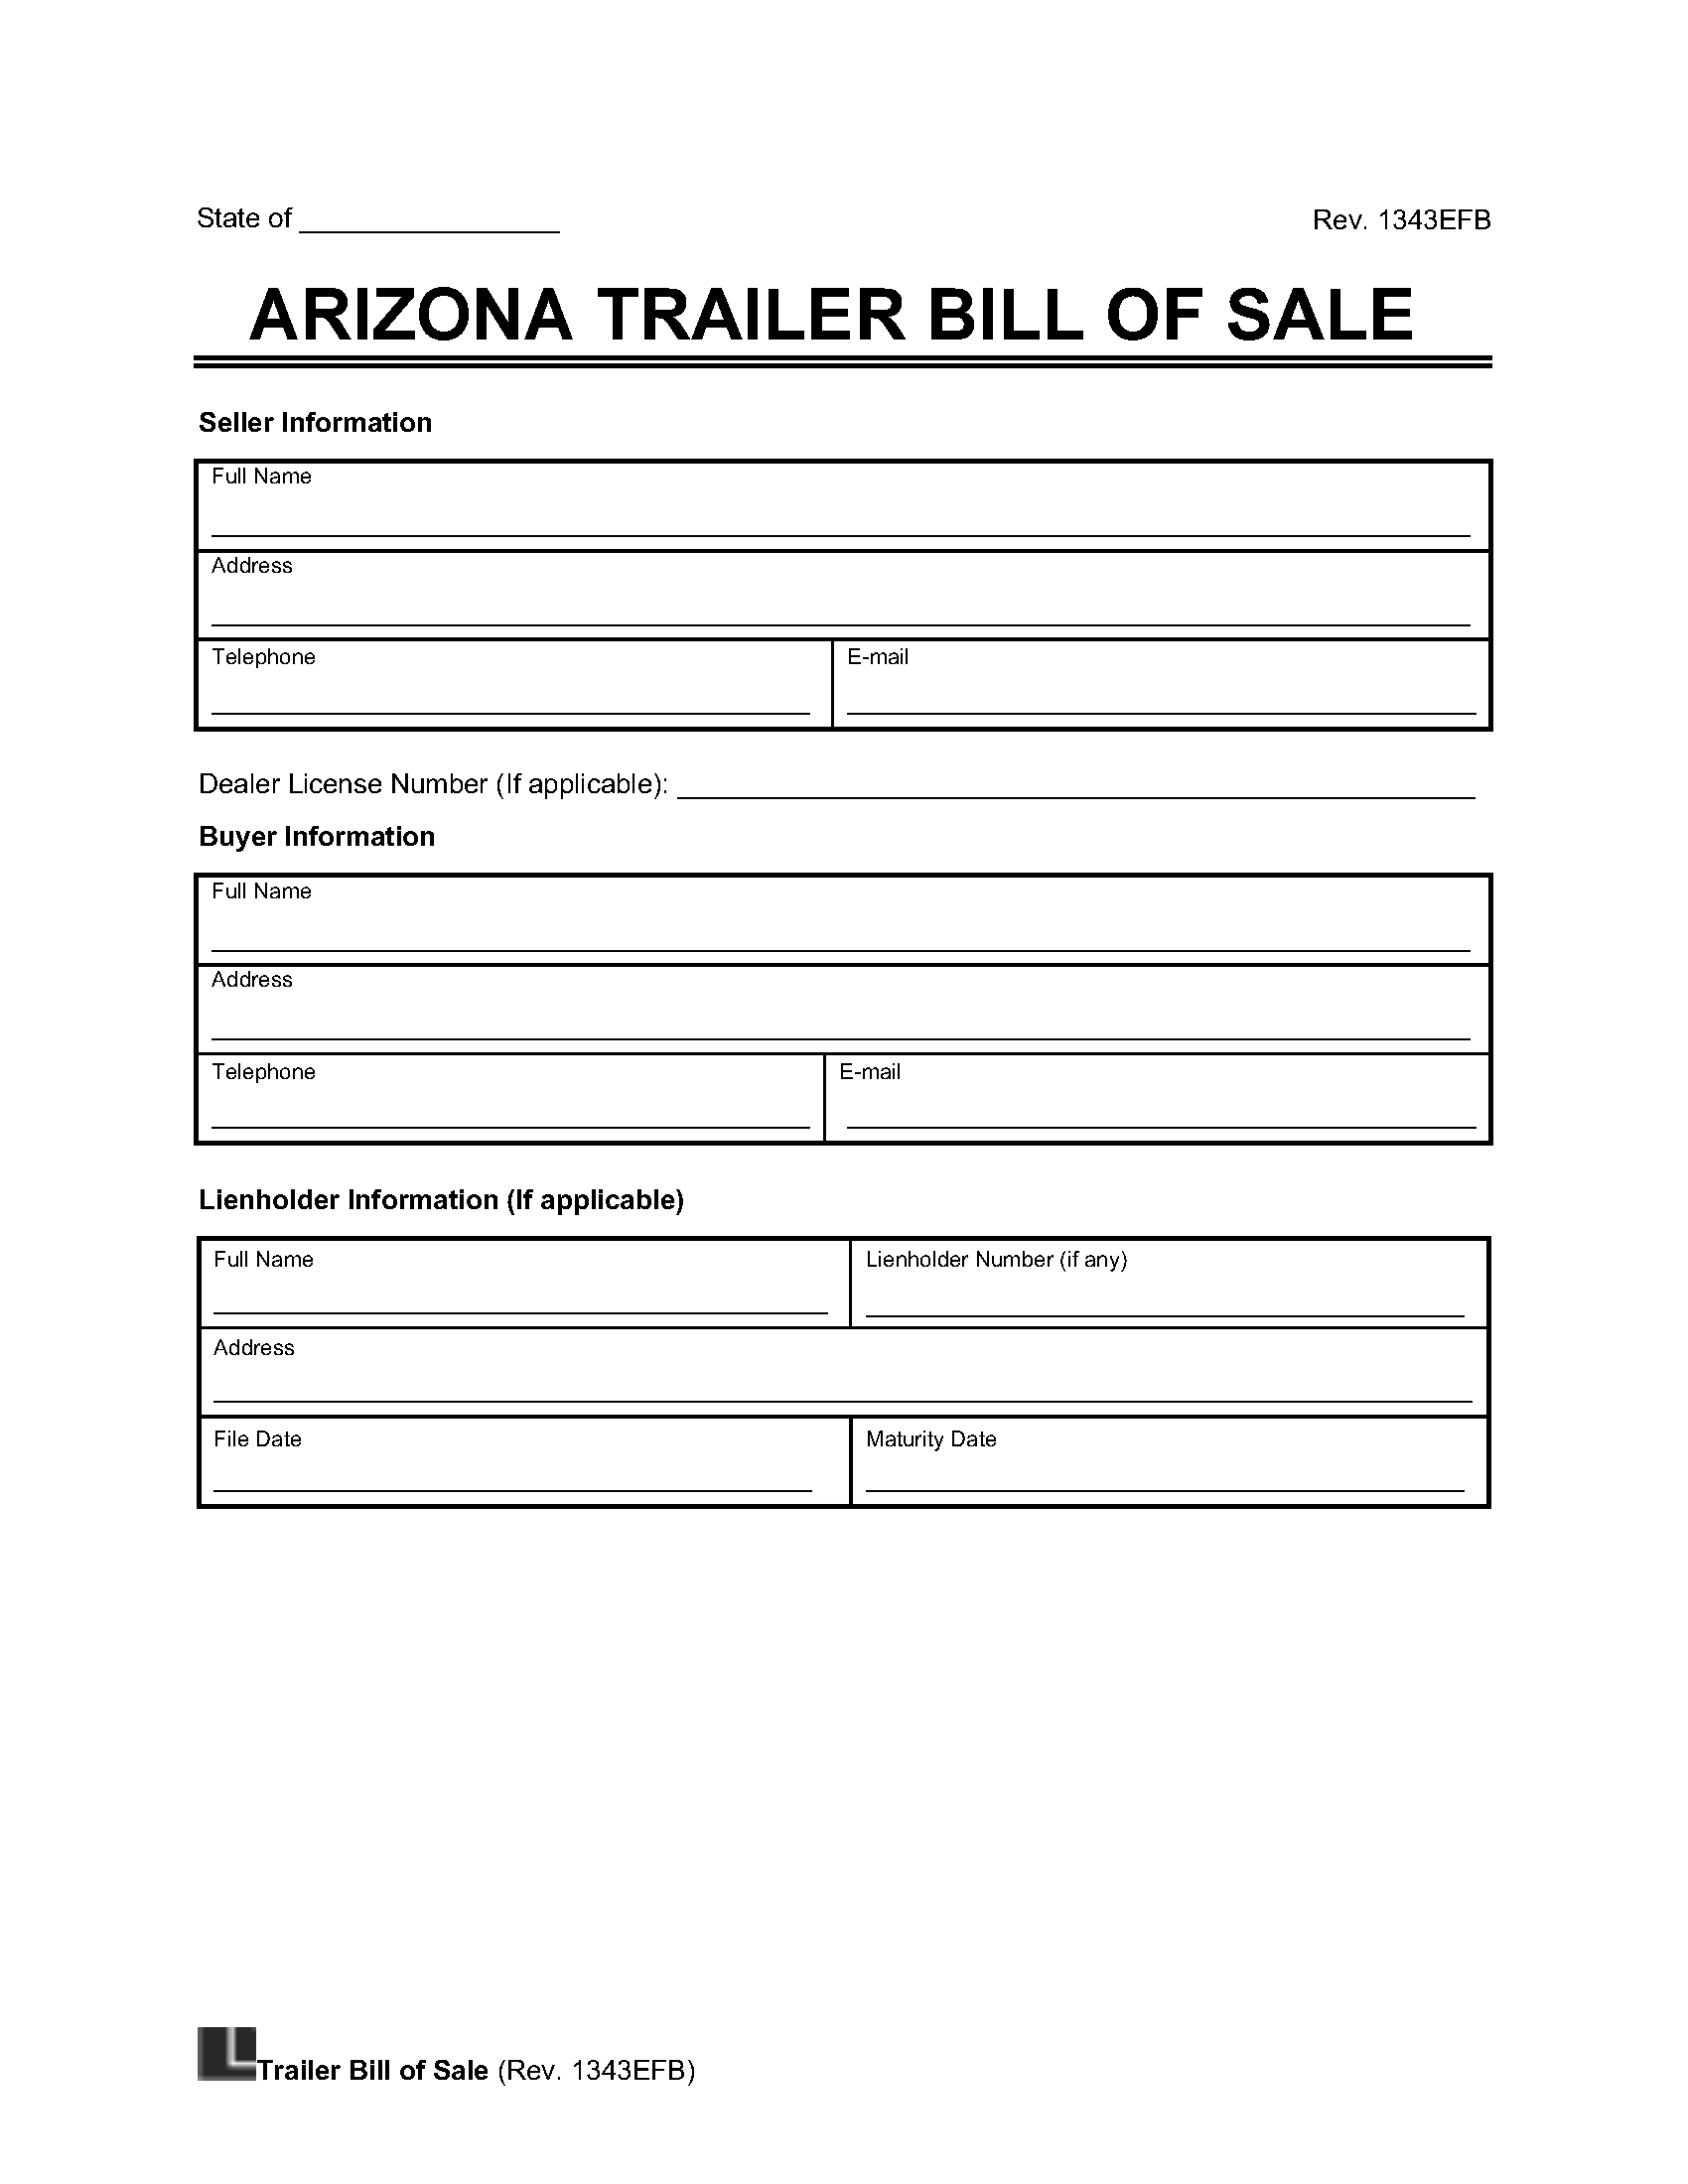 Arizona Trailer Bill of Sale screenshot